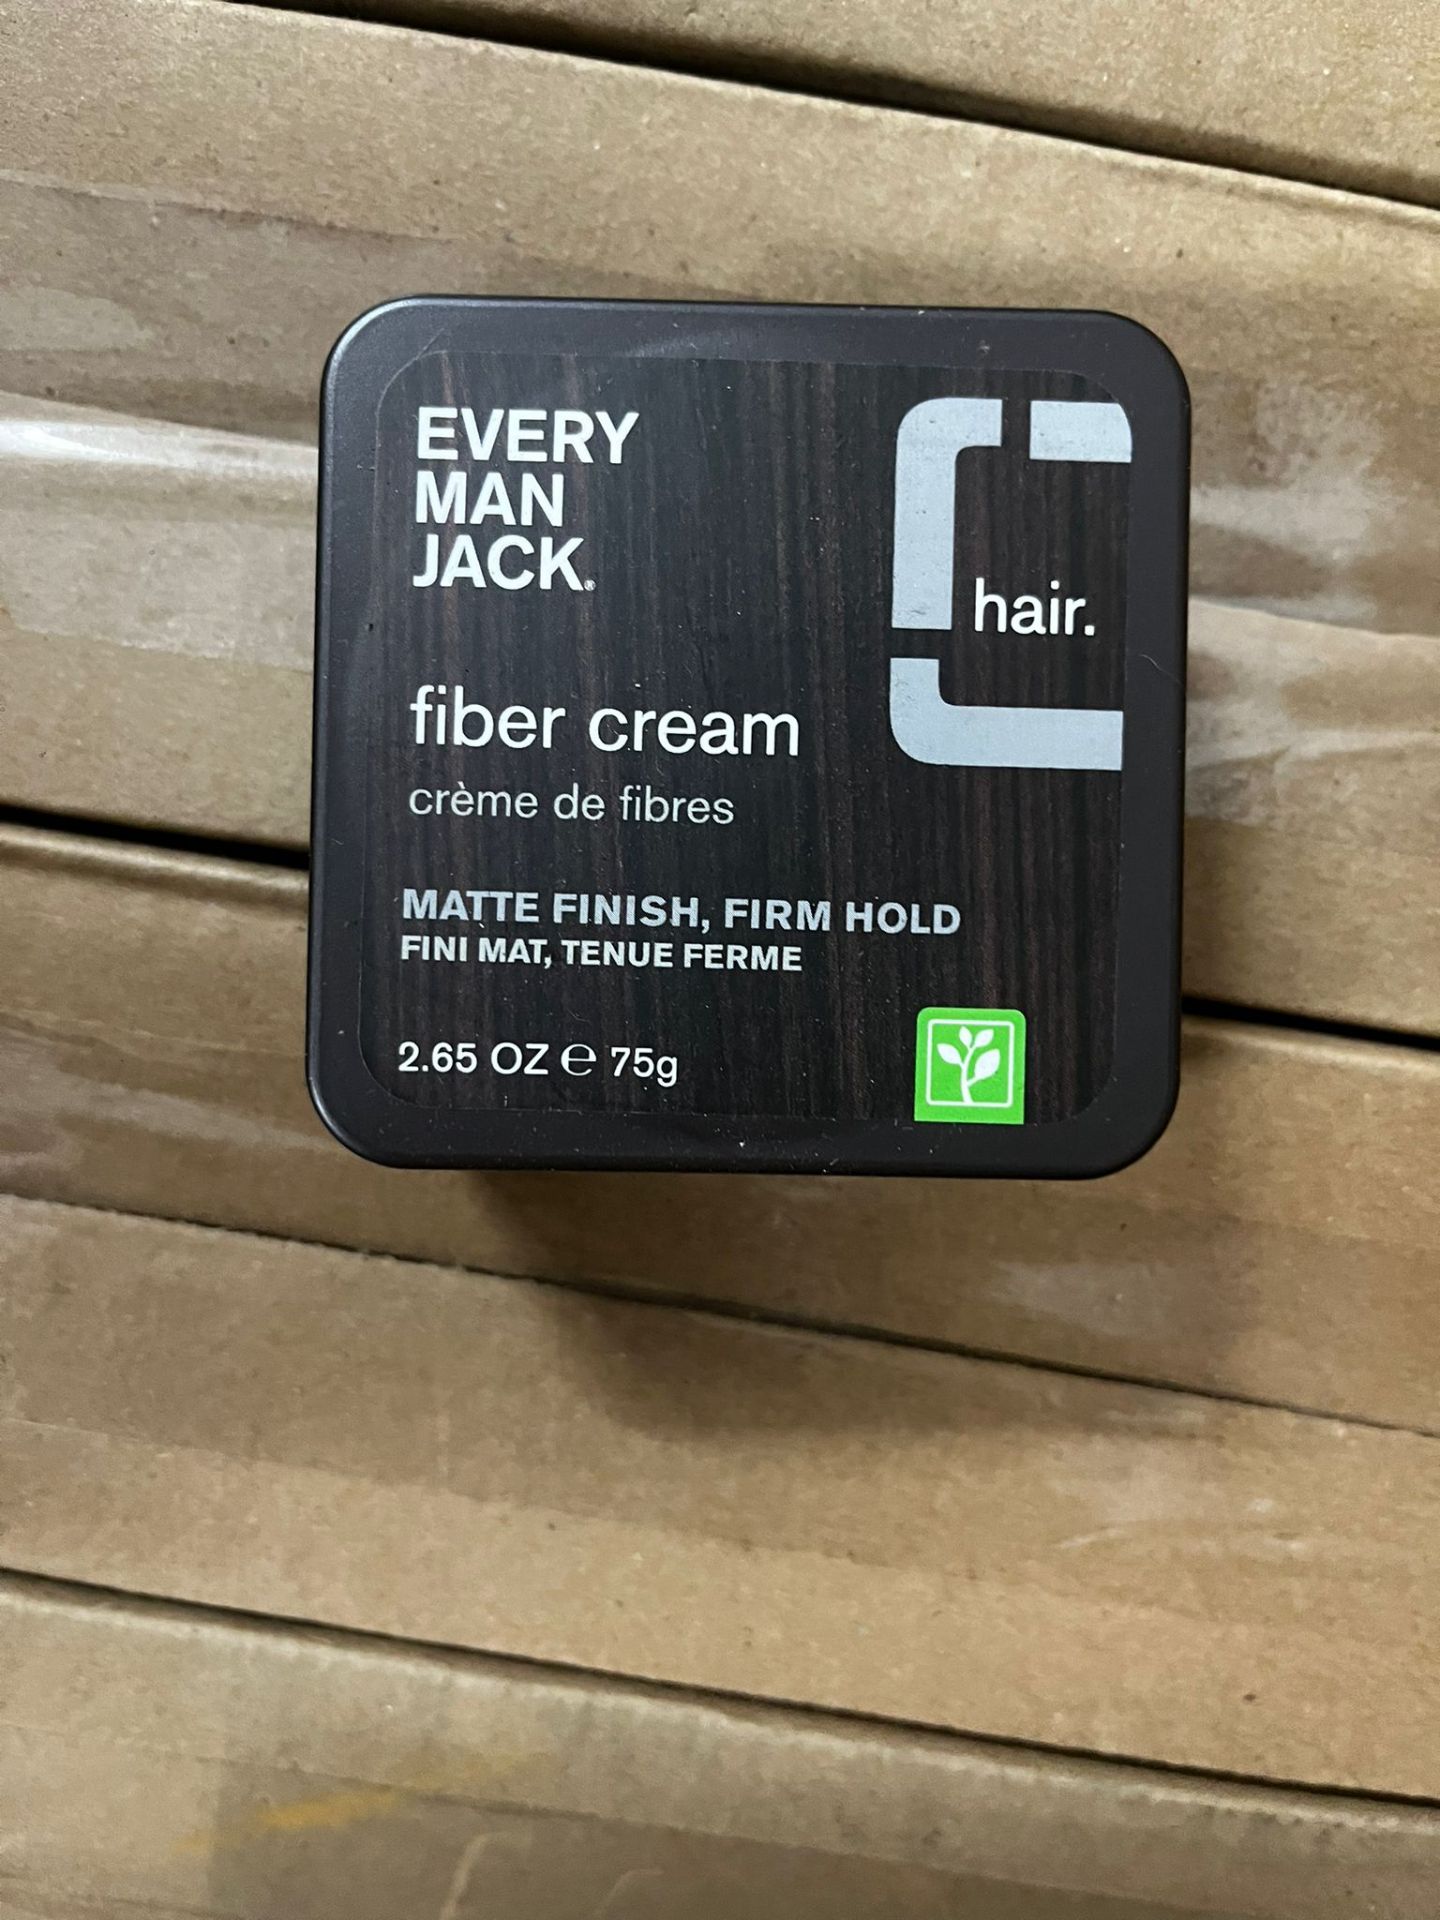 Every Man Jack Fiber Hair Cream x 90, Est retail value £900